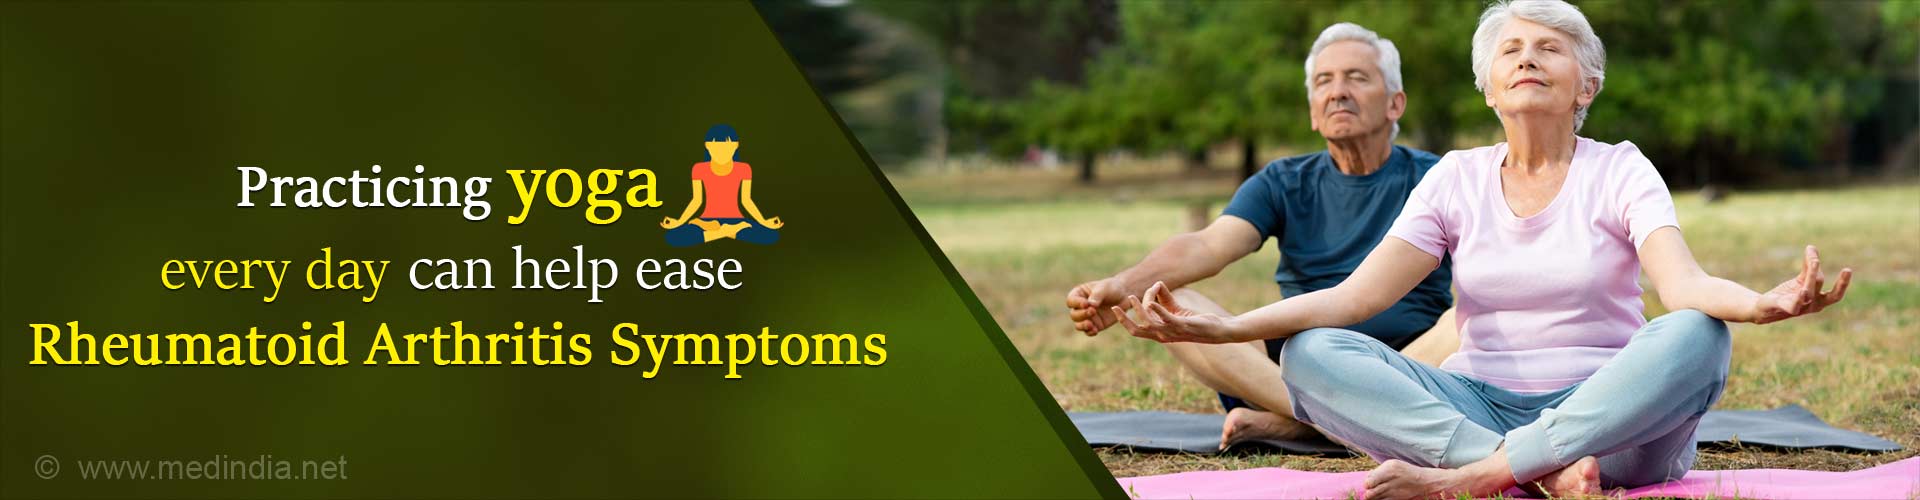 Practicing yoga every day can help ease rheumatoid arthritis symptoms.